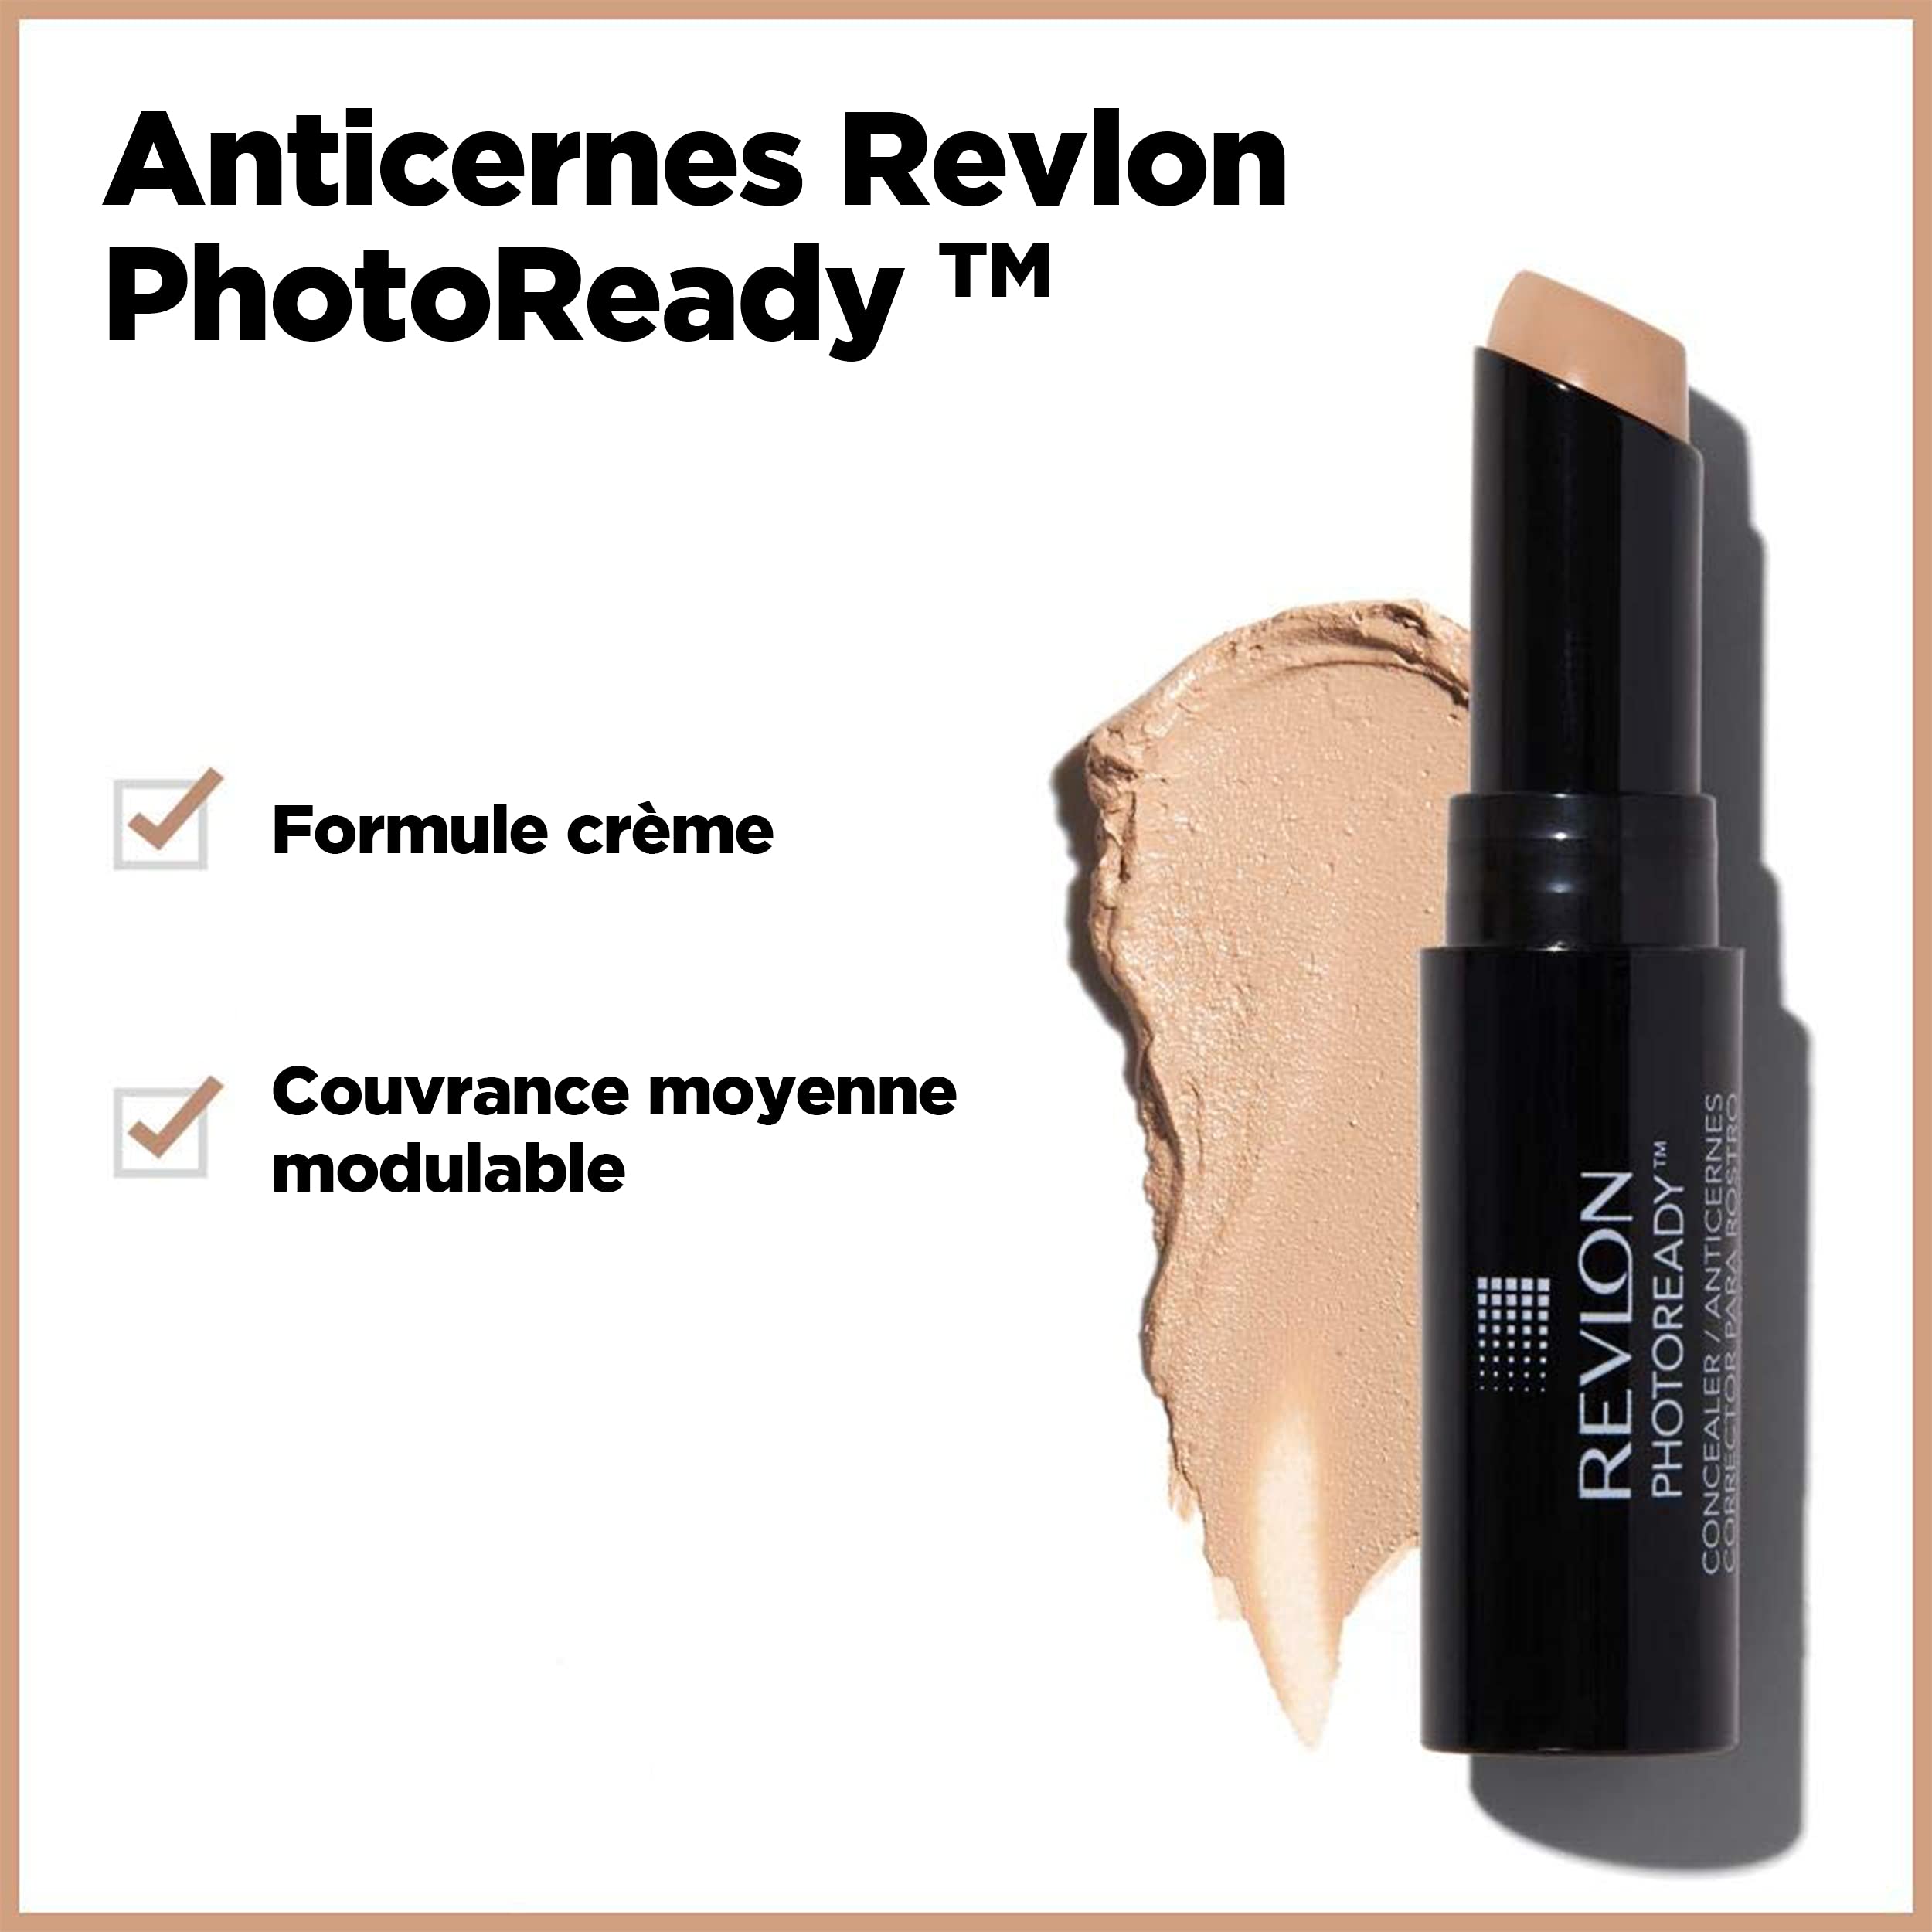 Revlon Concealer Stick, PhotoReady Face Makeup for All Skin Types, Longwear Medium- Full Coverage with Creamy Finish, Lightweight Formula, 004 Medium, 0.11 Oz